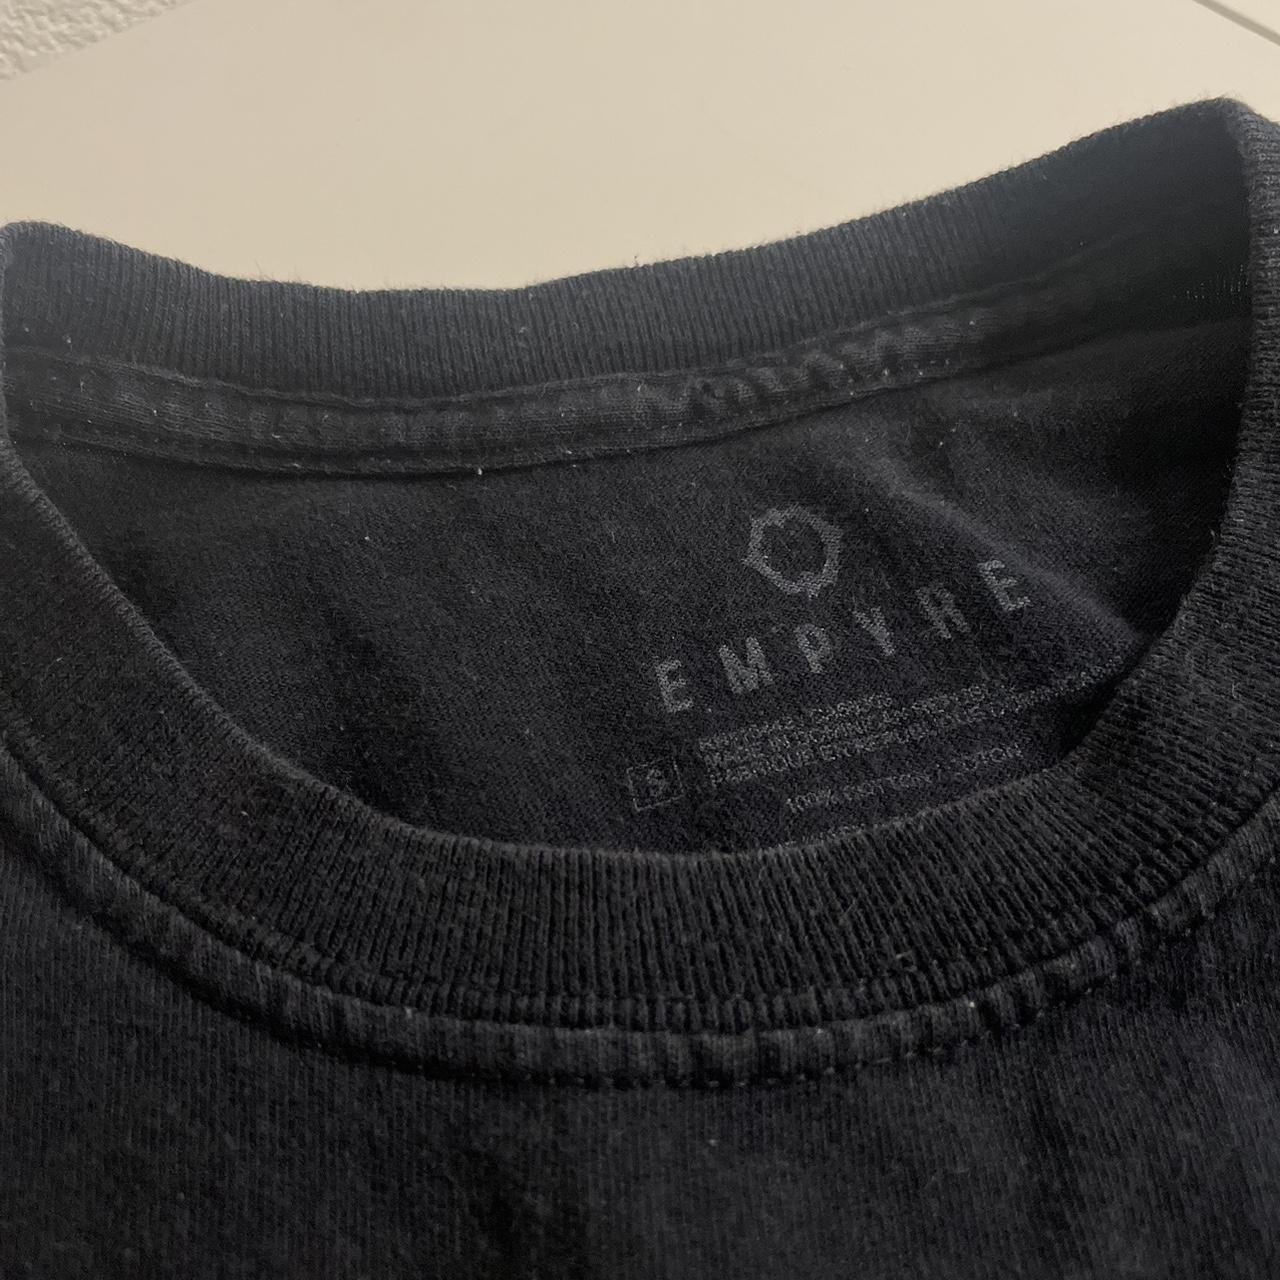 Empyre Lucky Day Black T-Shirt